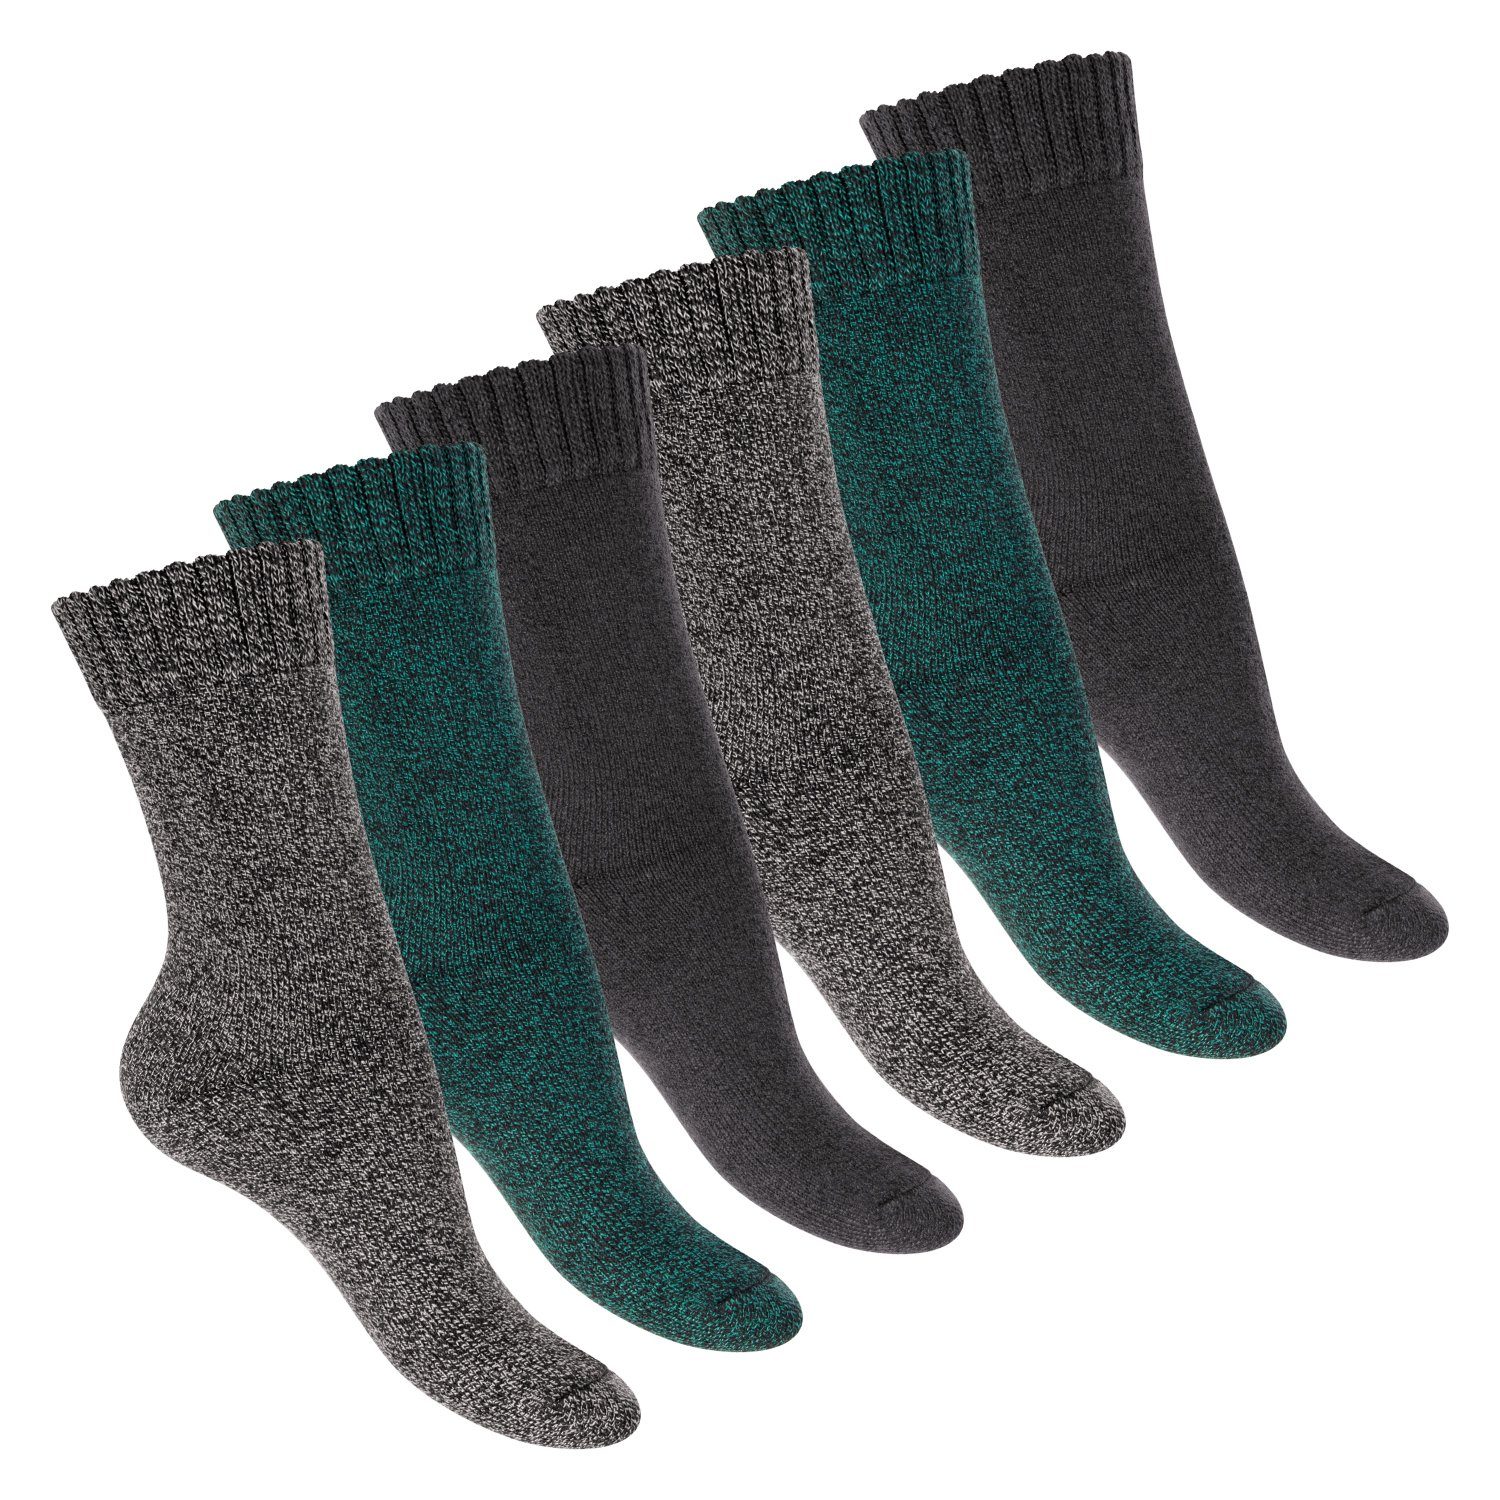 Footstar Thermosocken Damen Frottee Socken (6 Paar) Winter Socken mit Thermo Effekt Grau/Grün